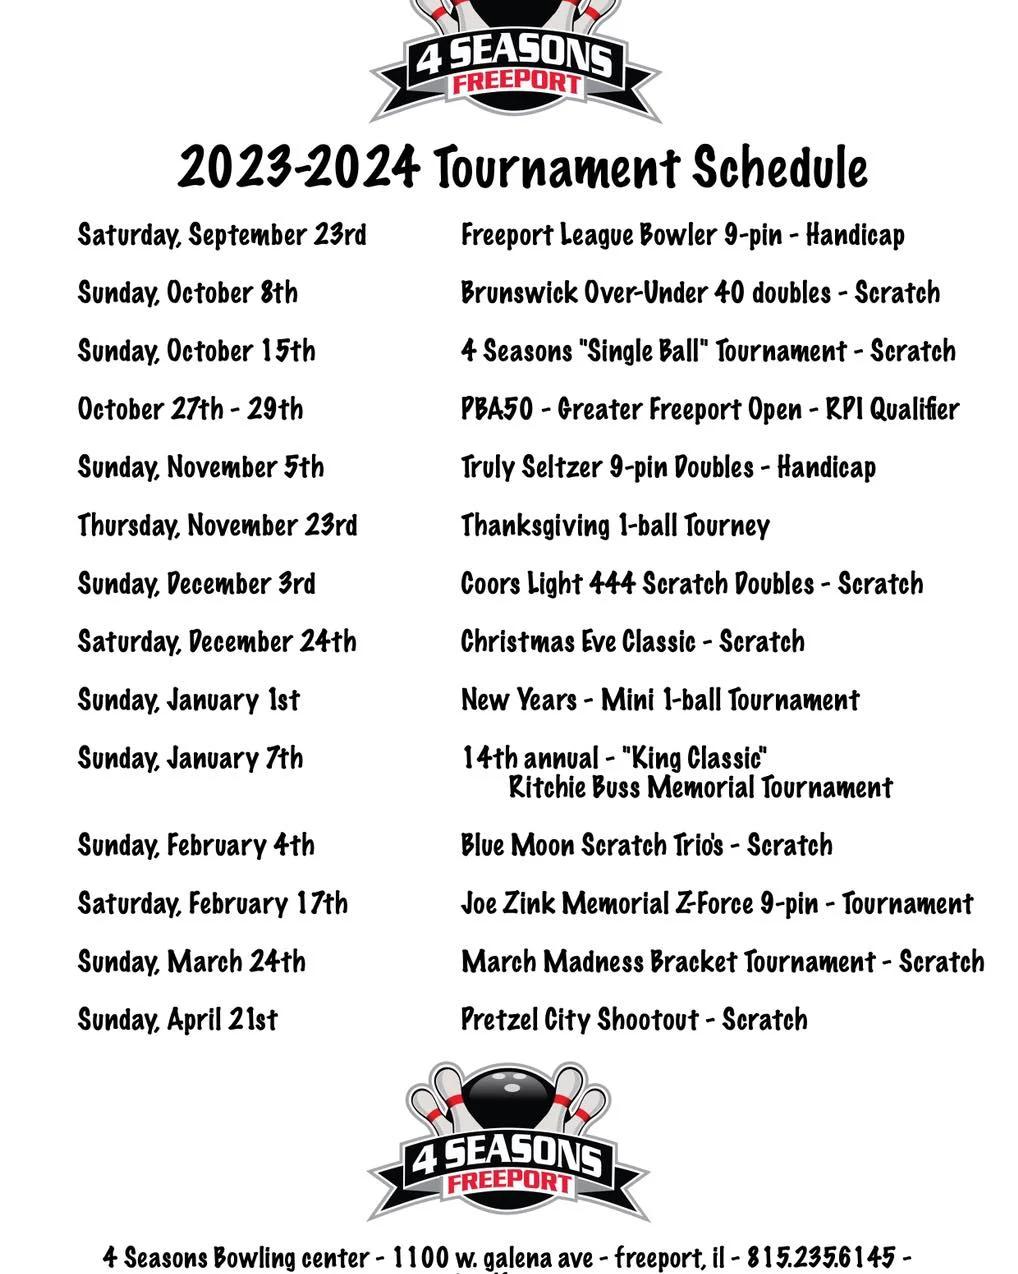 4 Seasons Freeport, Illinois 2023-24 tournaments